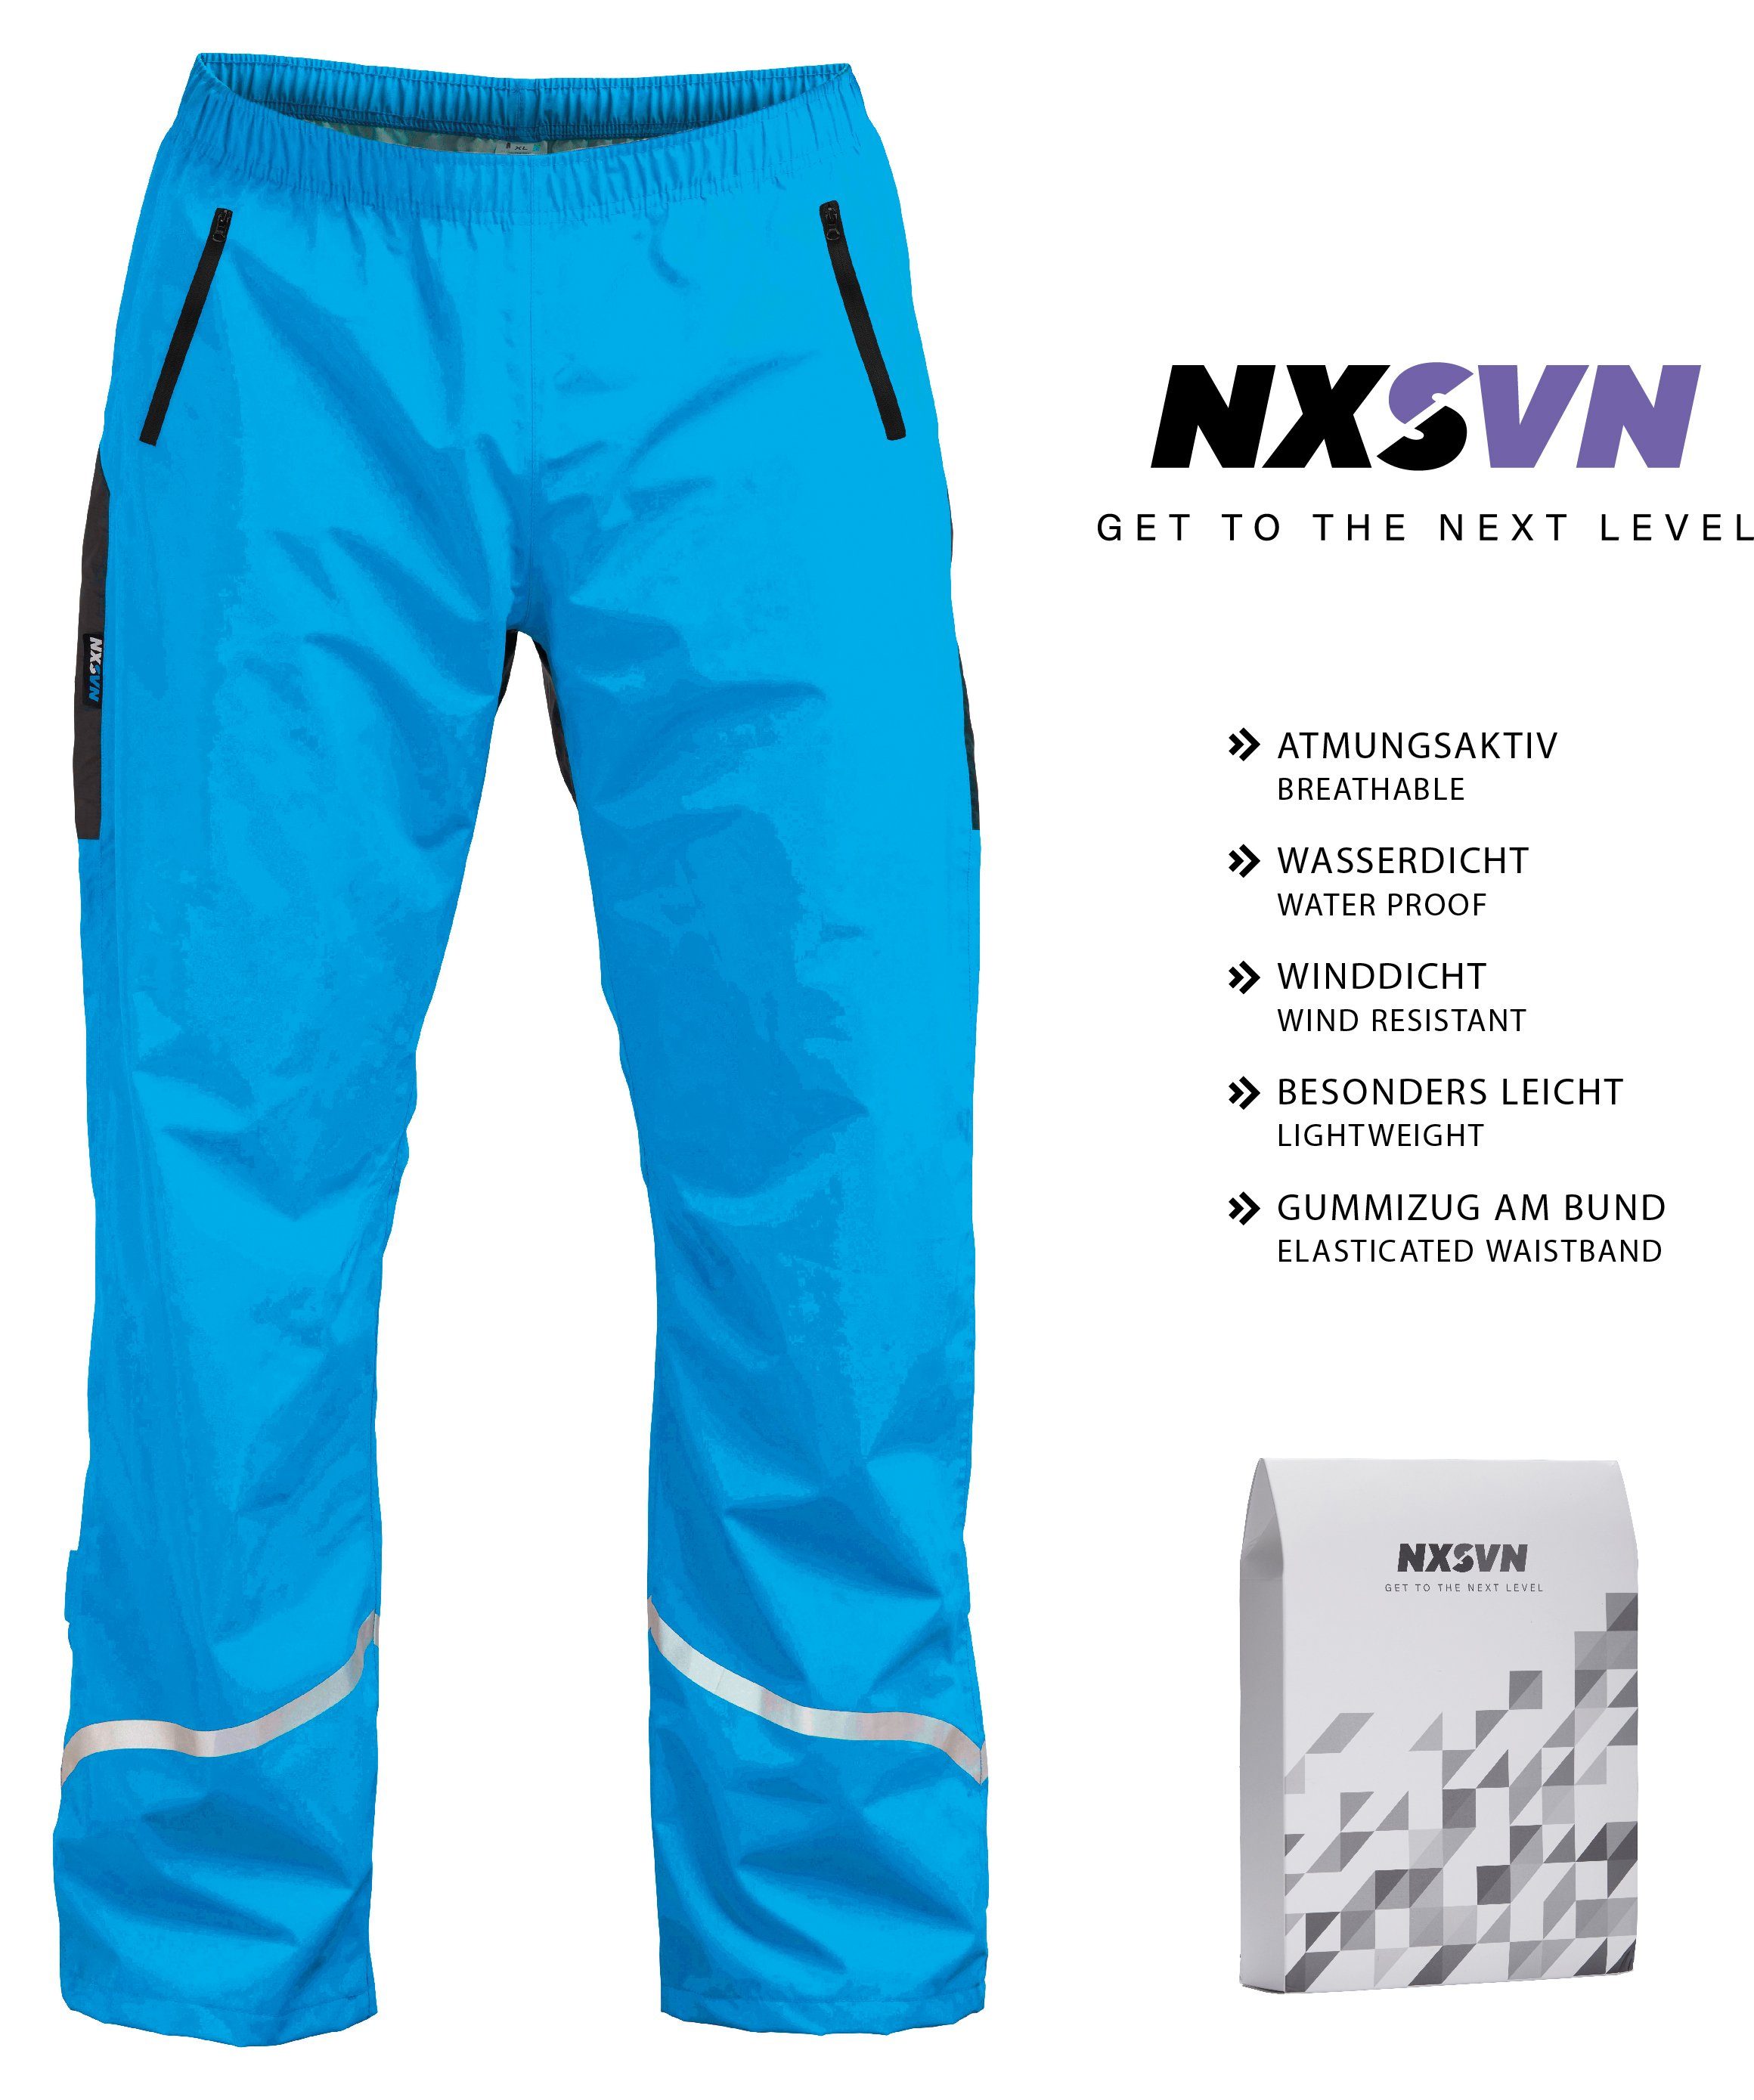 Rubberneck NXSVN Regenhose Regenhose Blau Fahrrad Atmungsaktiv, Reflektierend